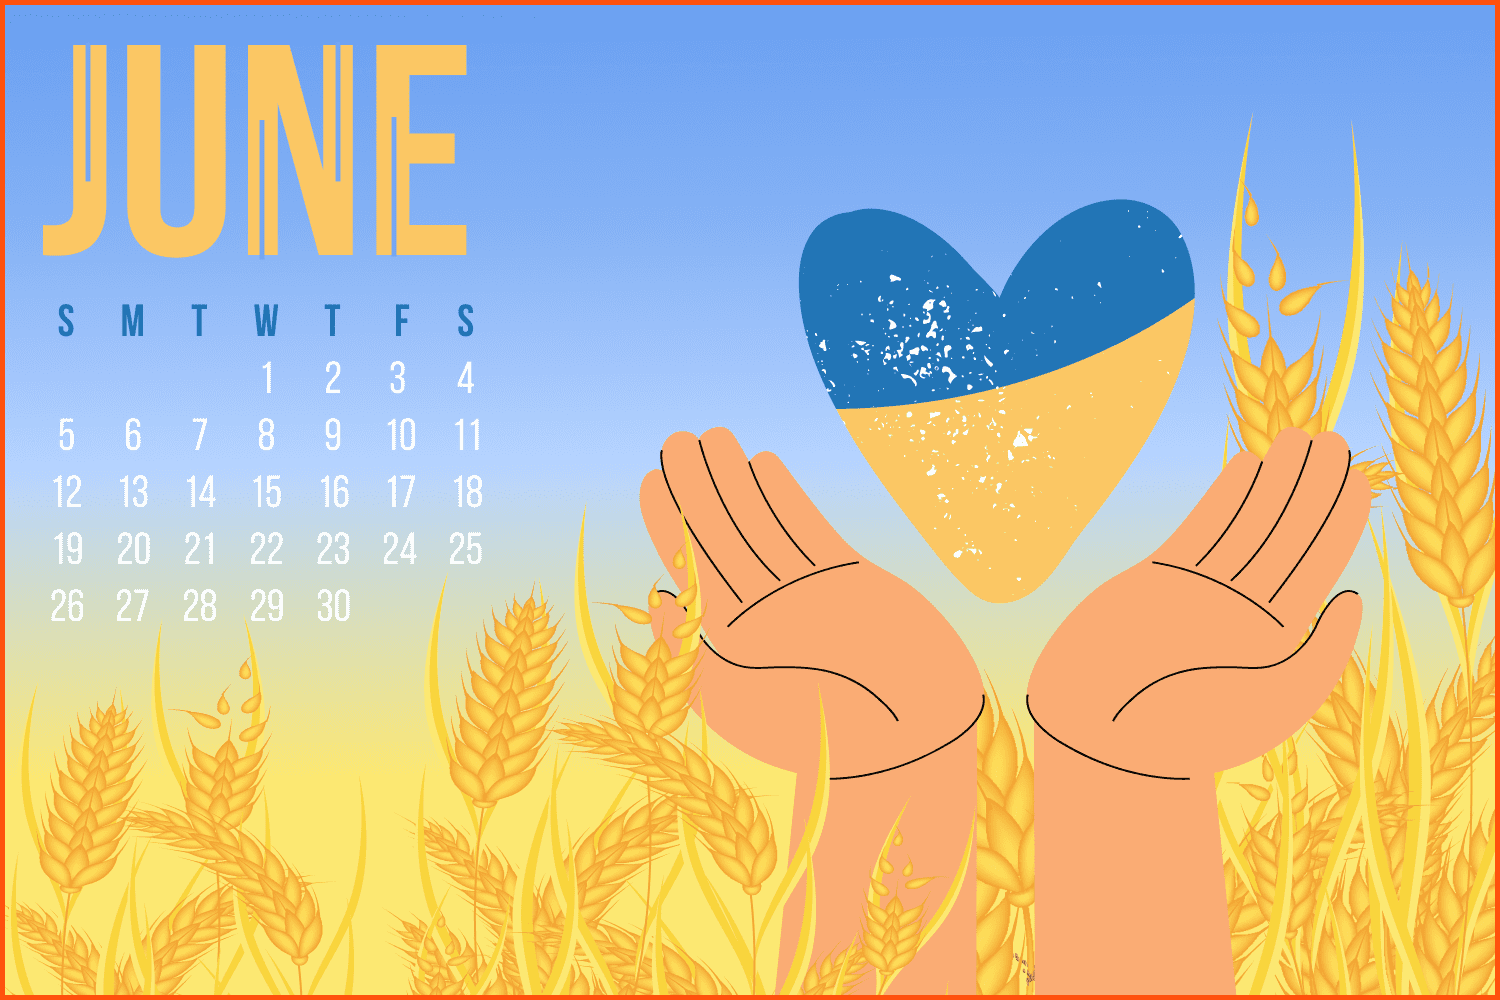 Free Stand with Ukraine June Calendar.